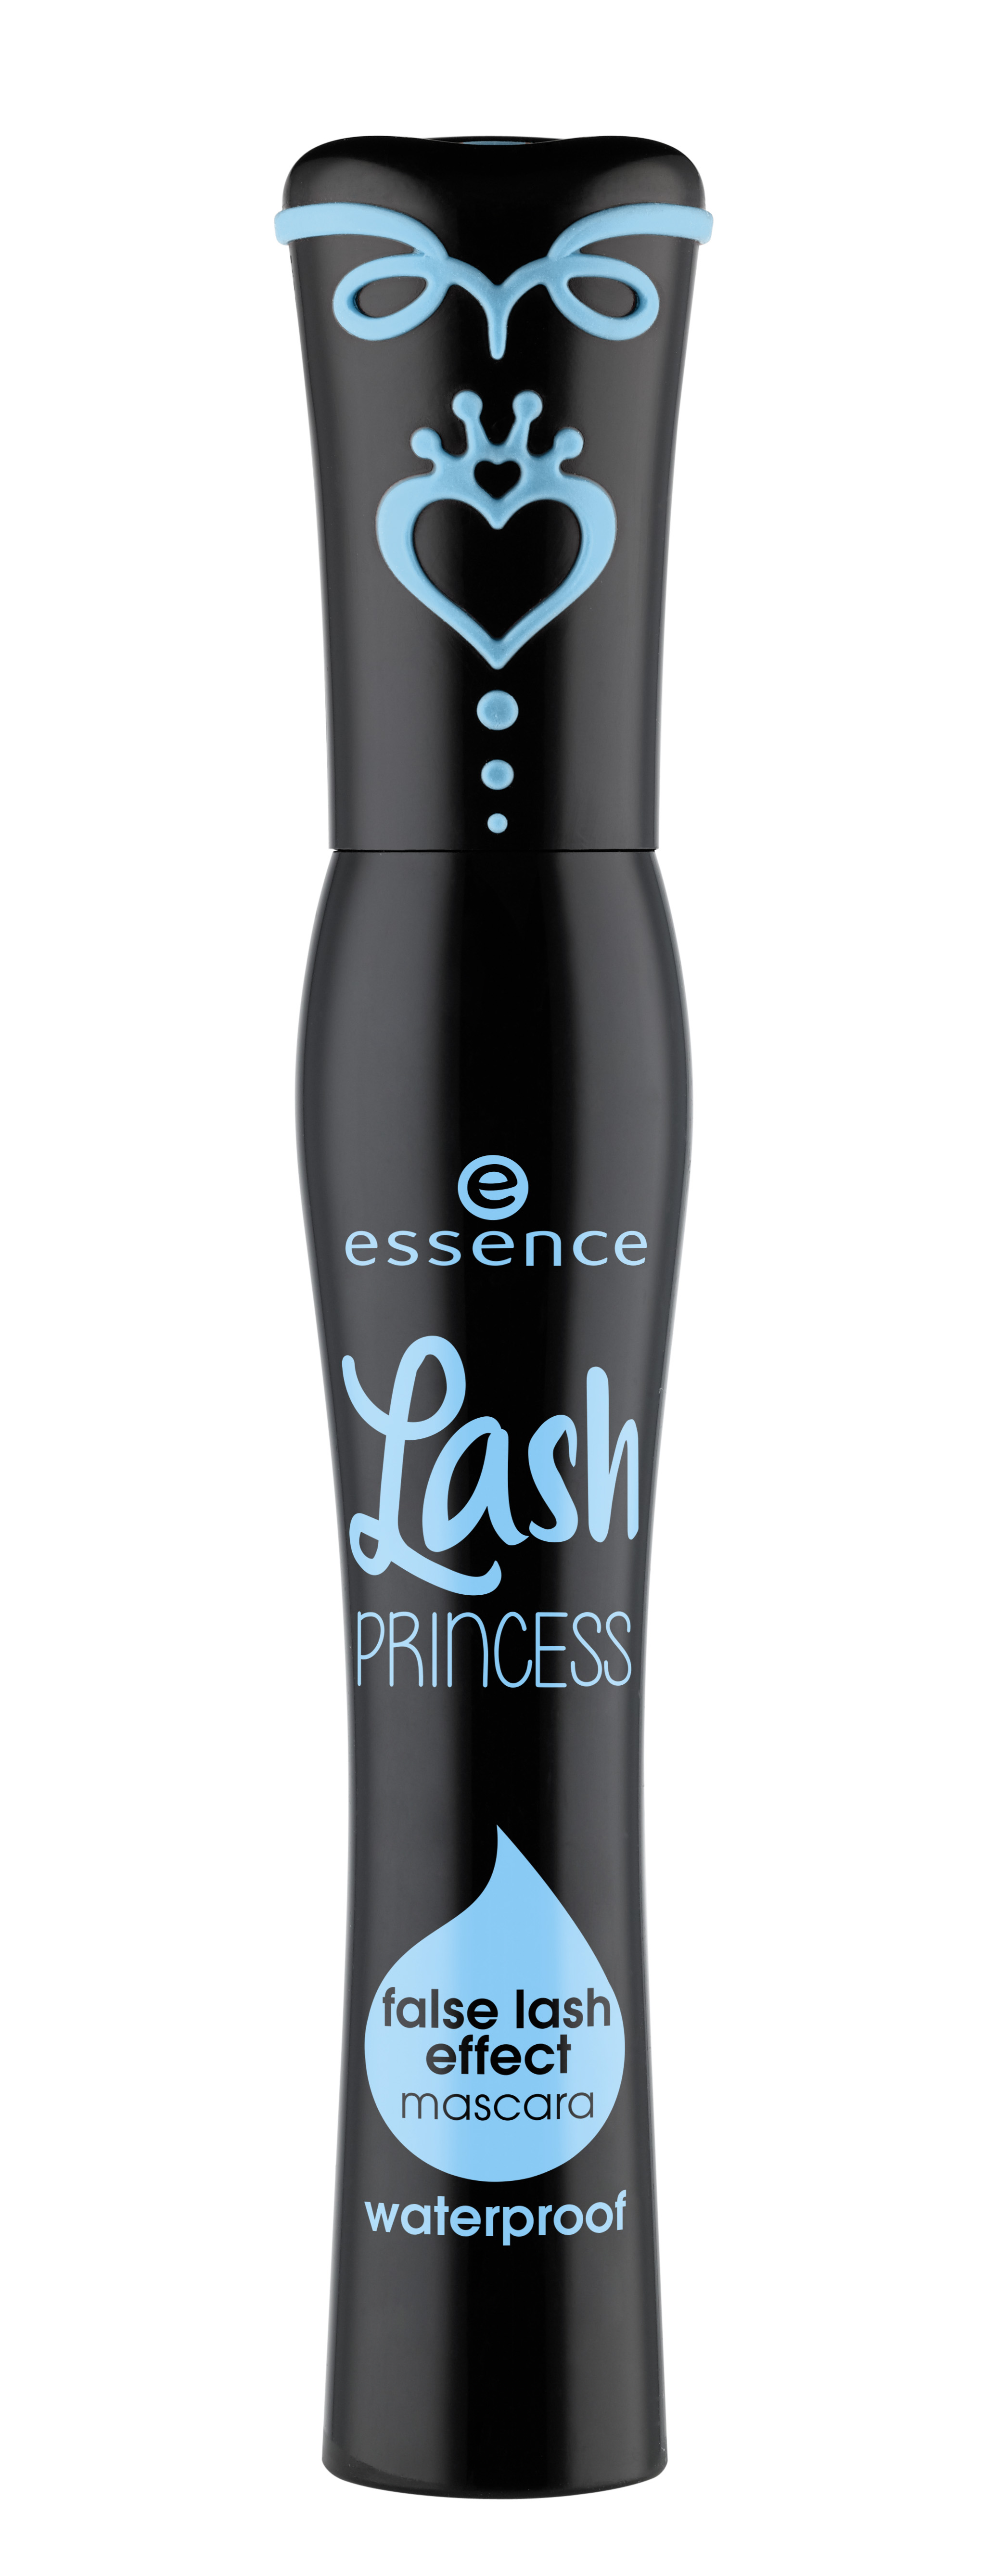 essence lash false effect mascara waterproof |